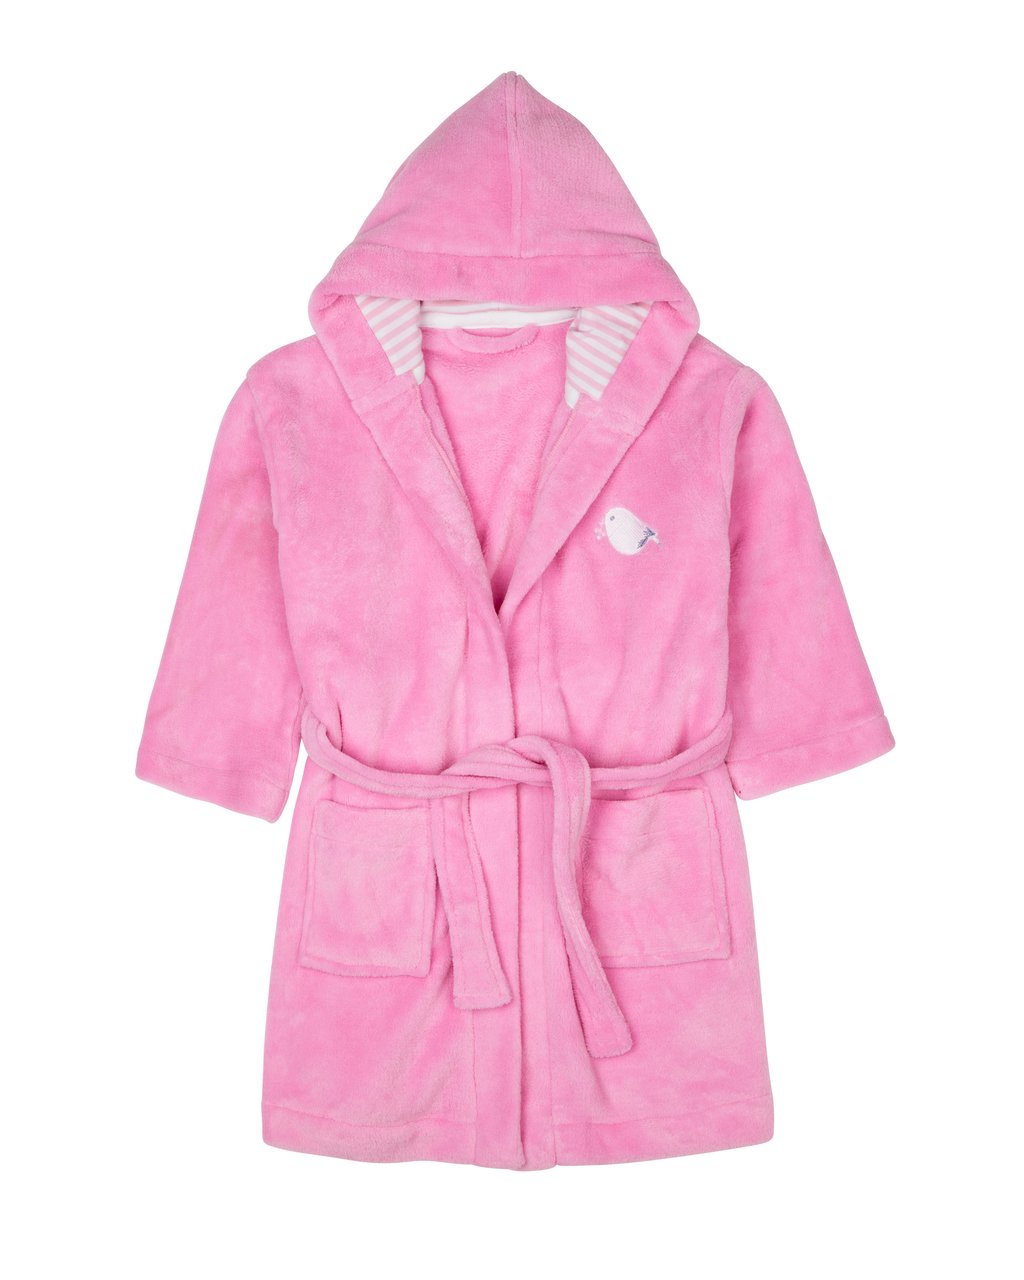 Girls soft micro-fleece winter robe - Pink robin